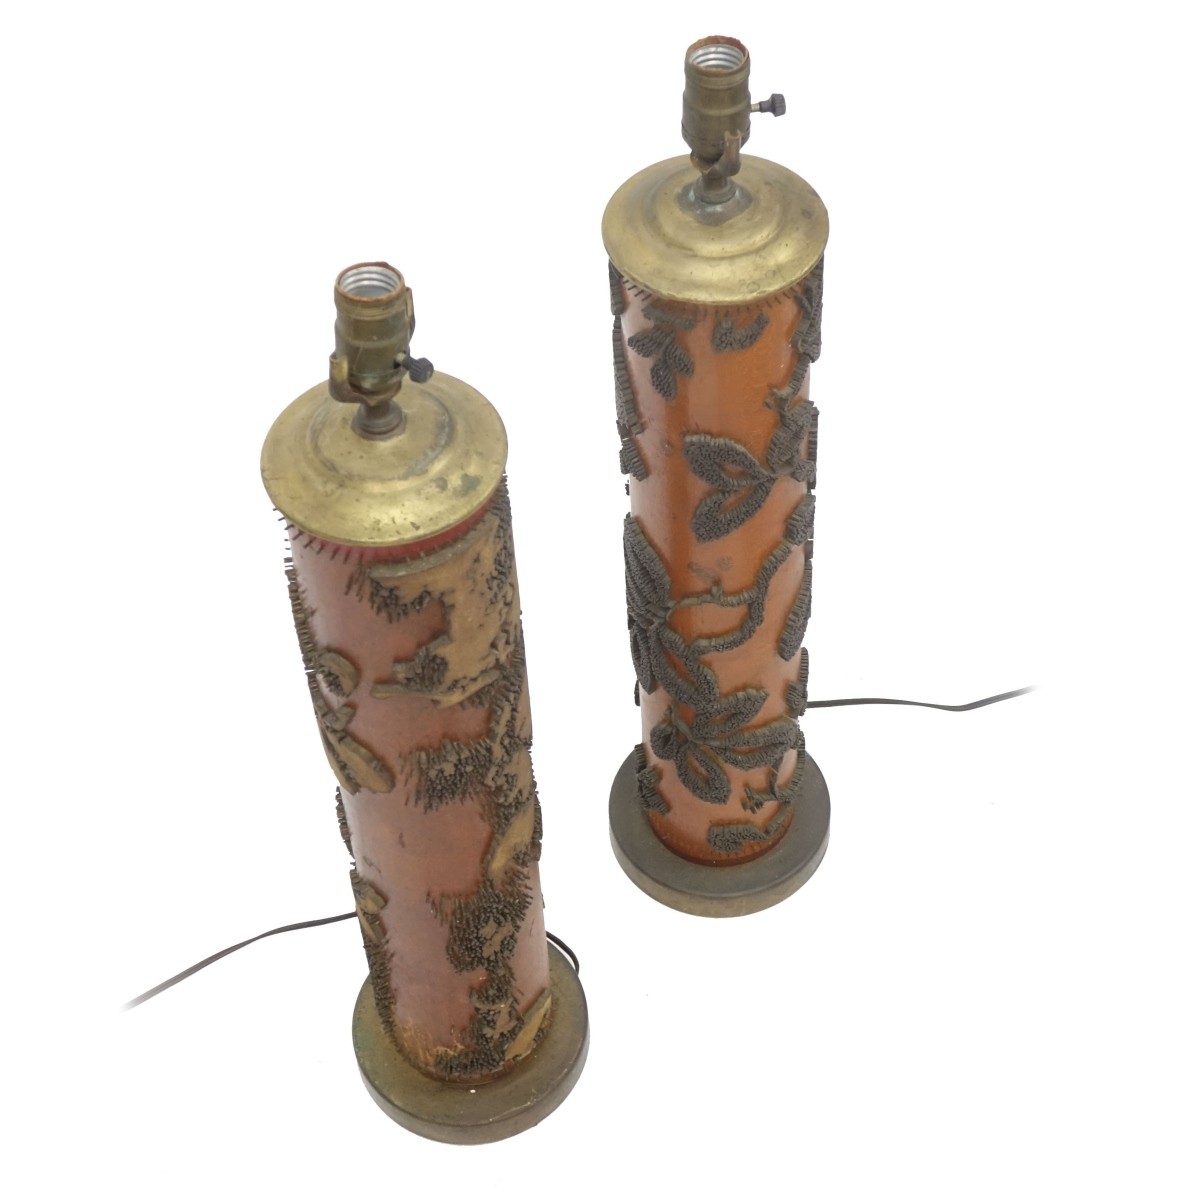 Pair of Printing Rollers as Lamps